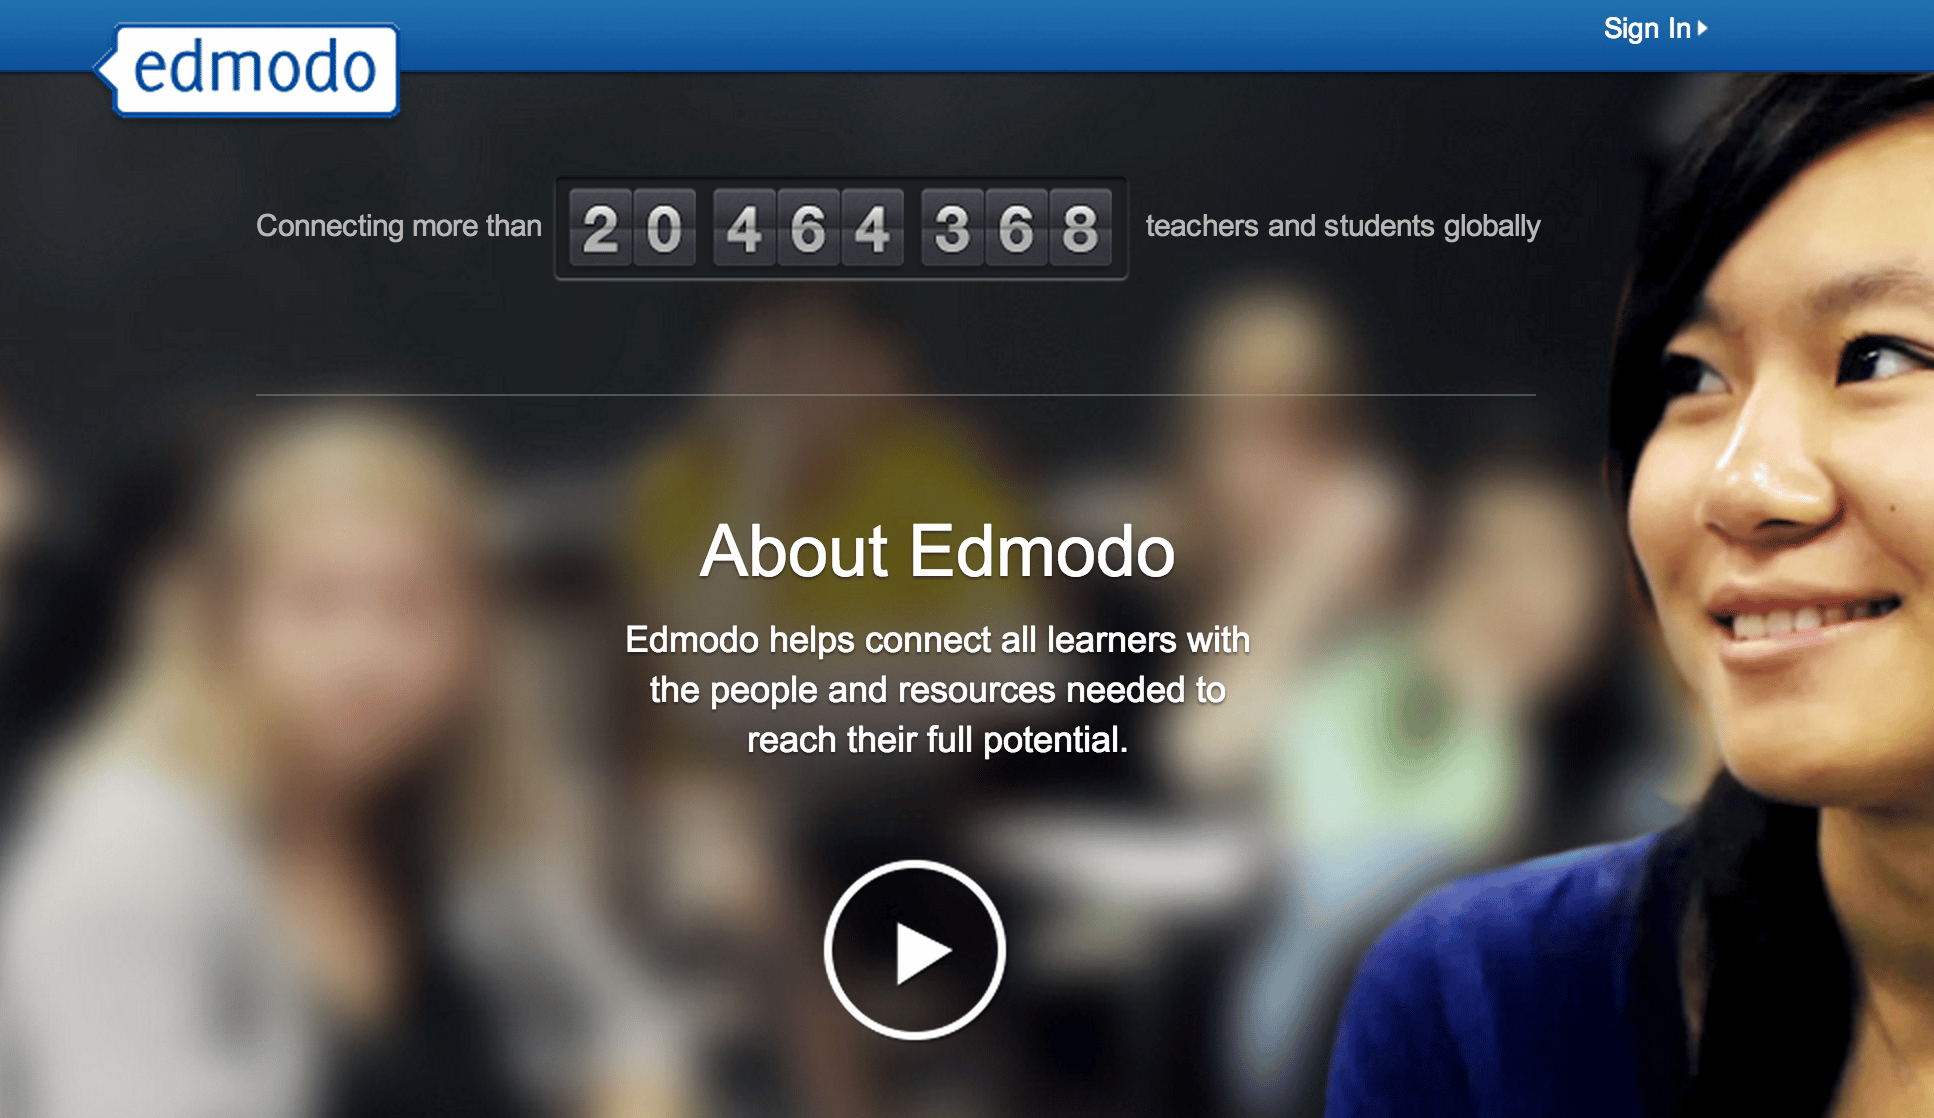 what does the edmodo app do